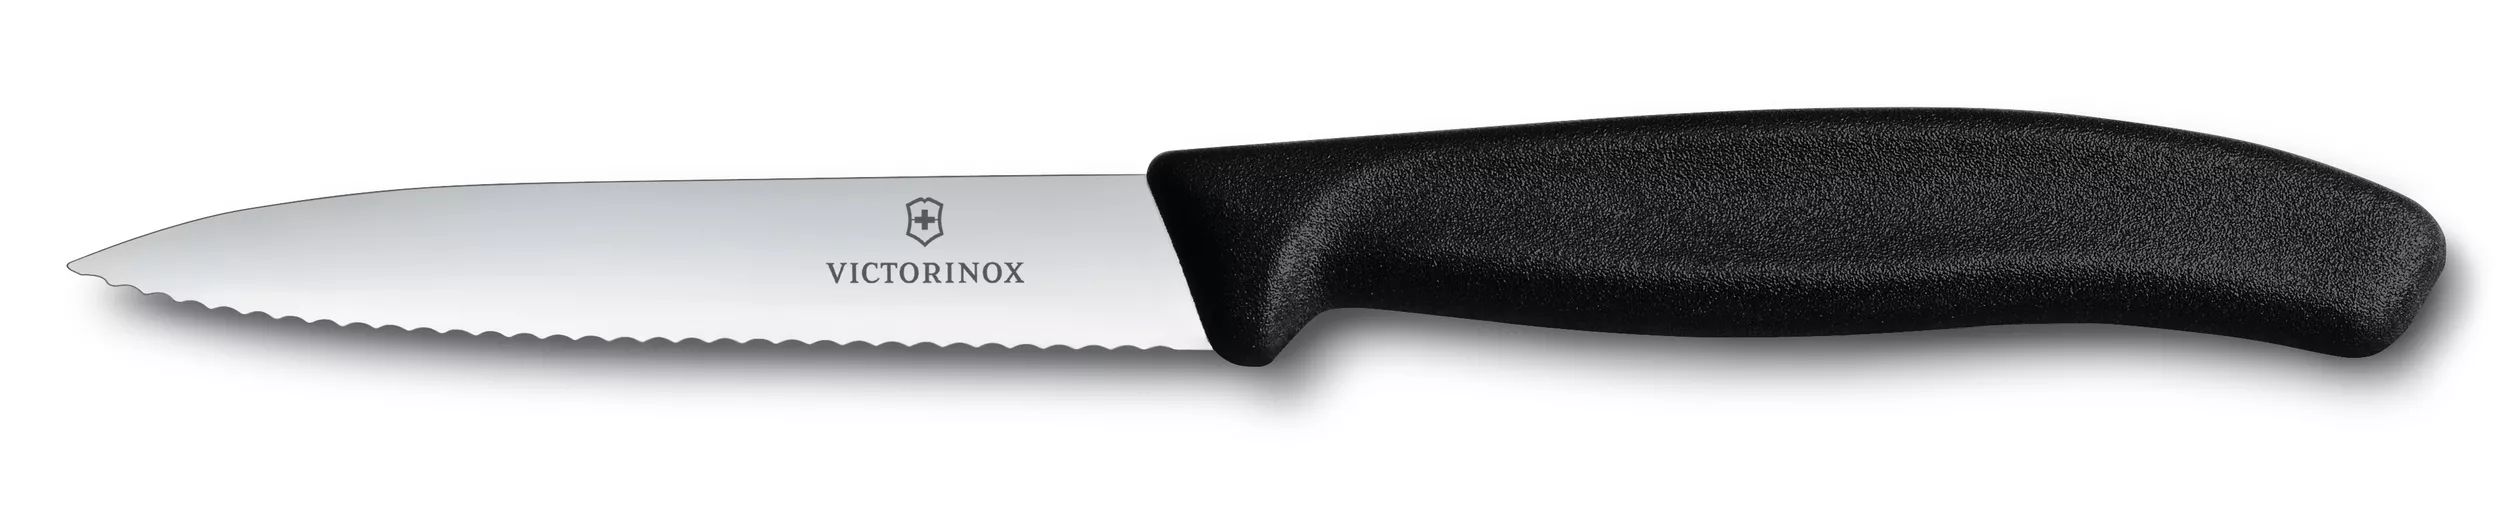 Swiss Classic Paring Knife-6.7733